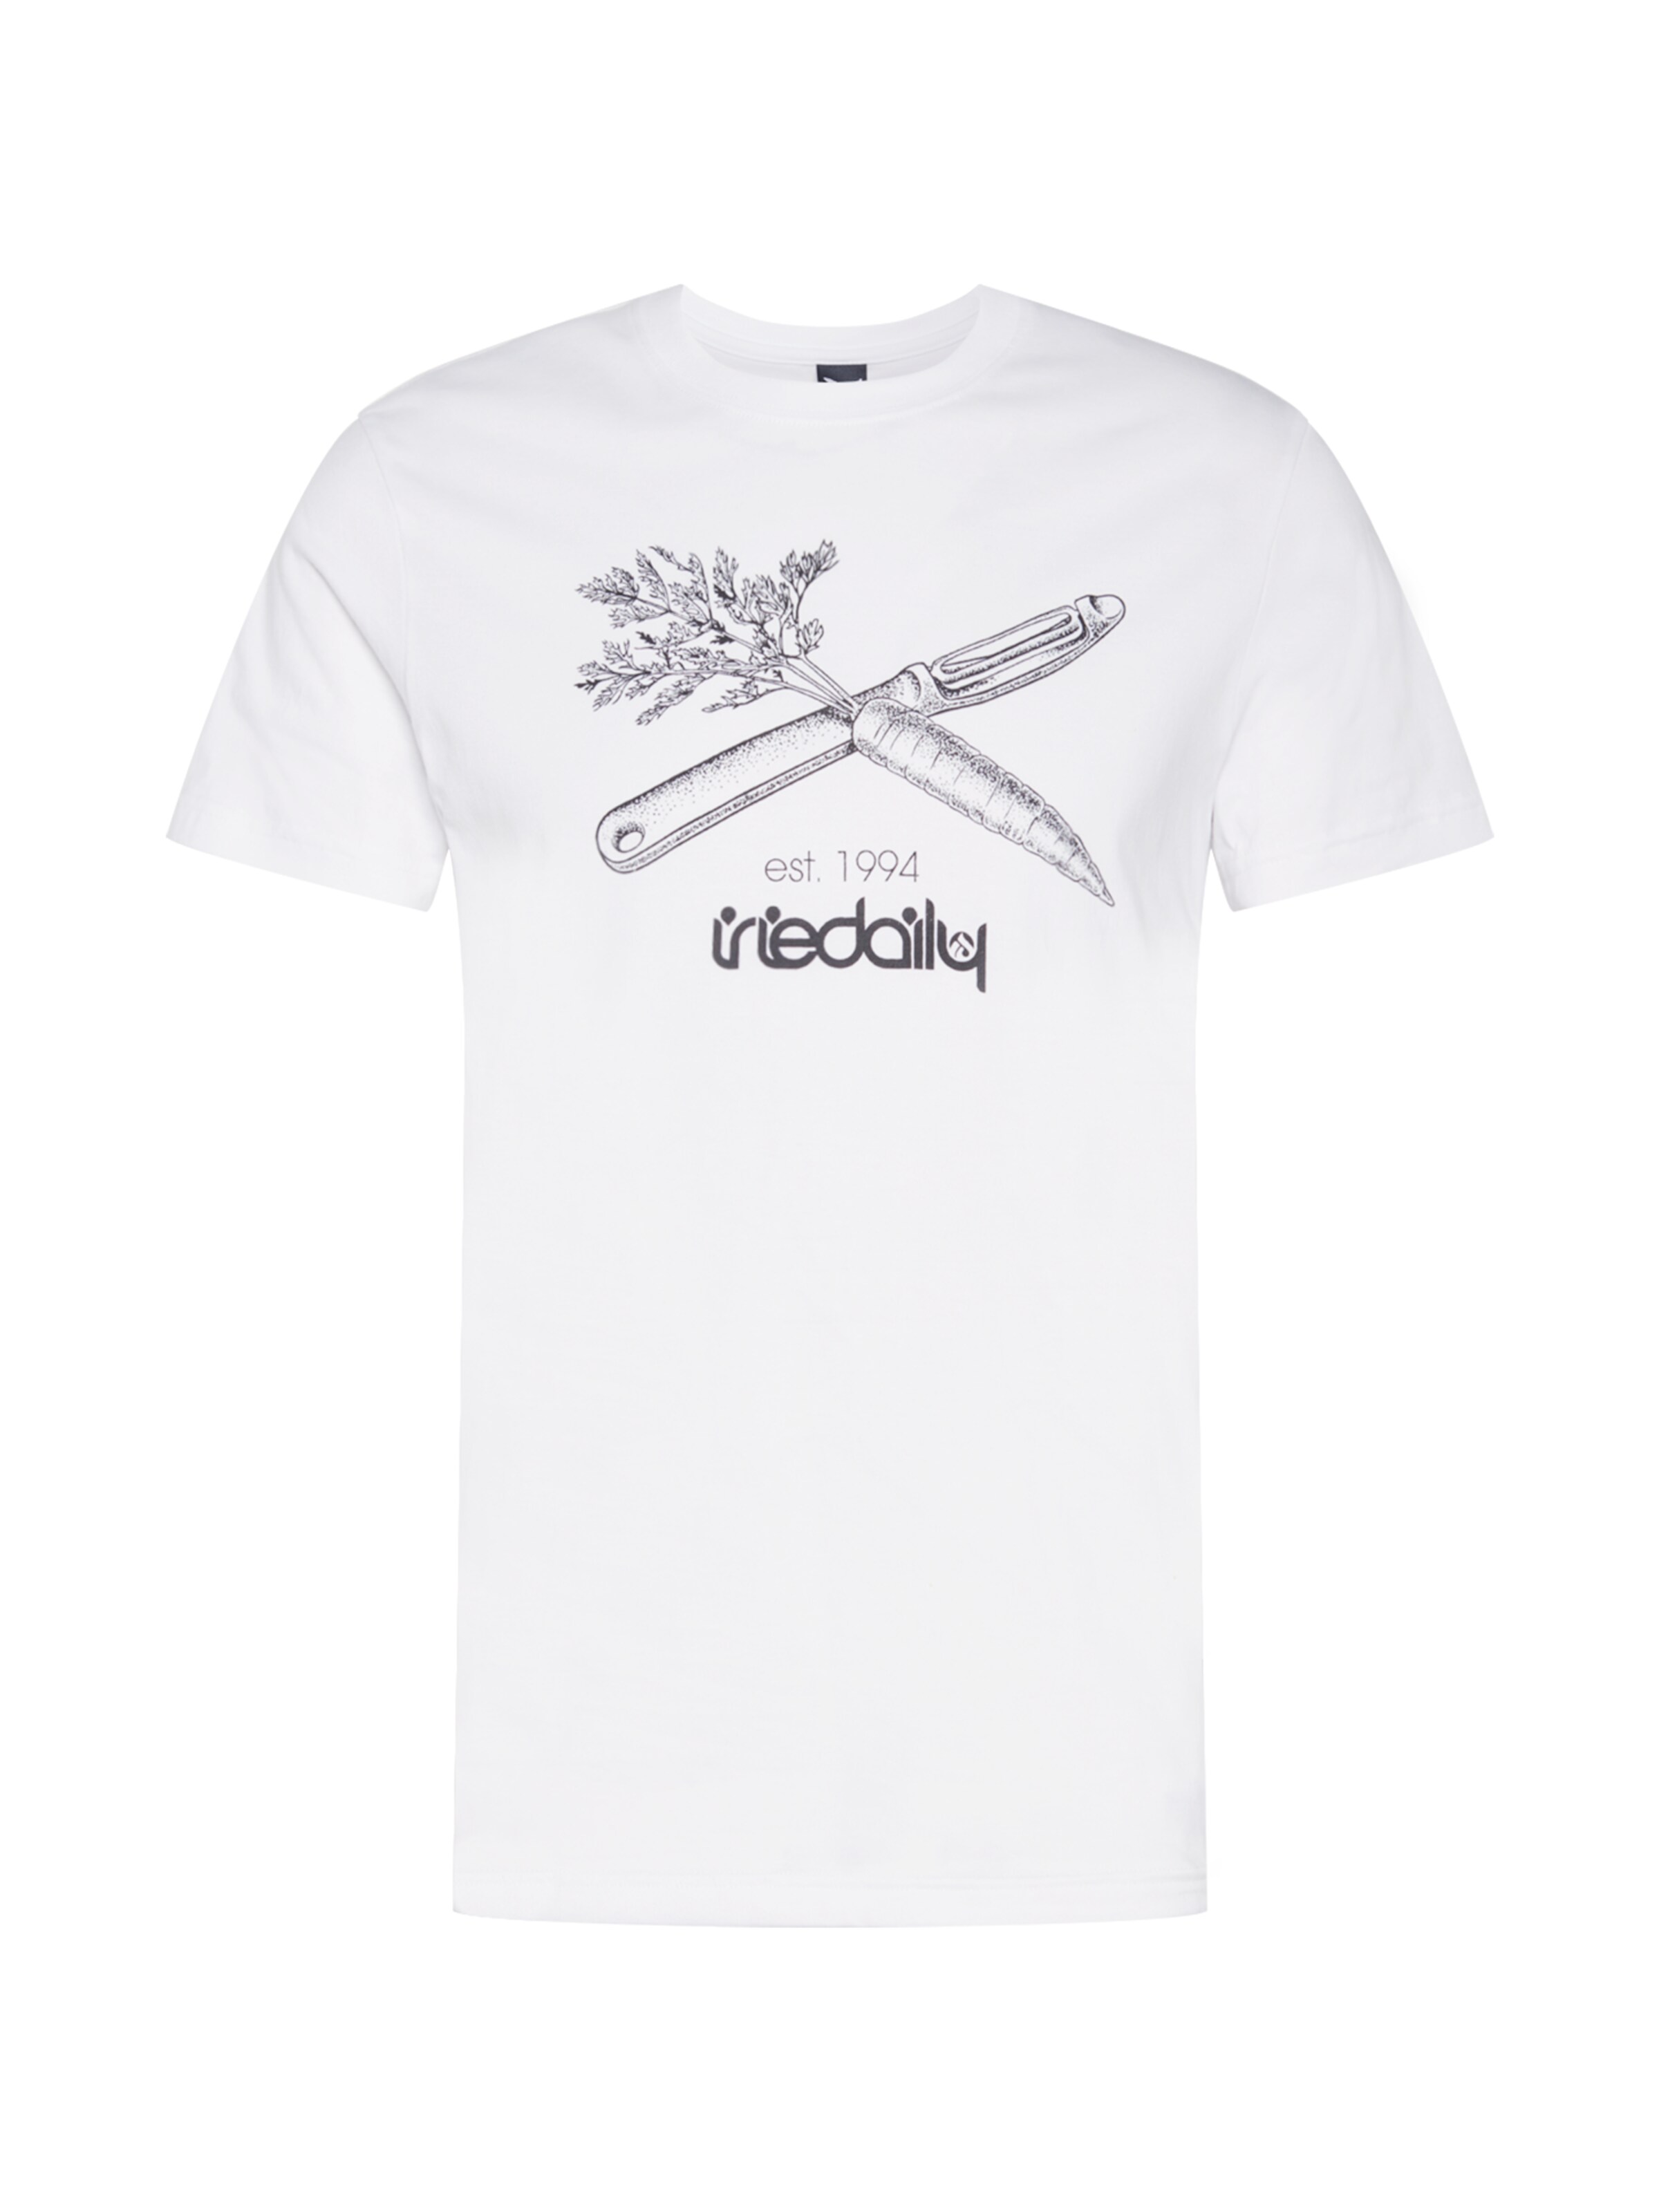 Abbigliamento Uomo Iriedaily Shirt Vegan Flag in Bianco 